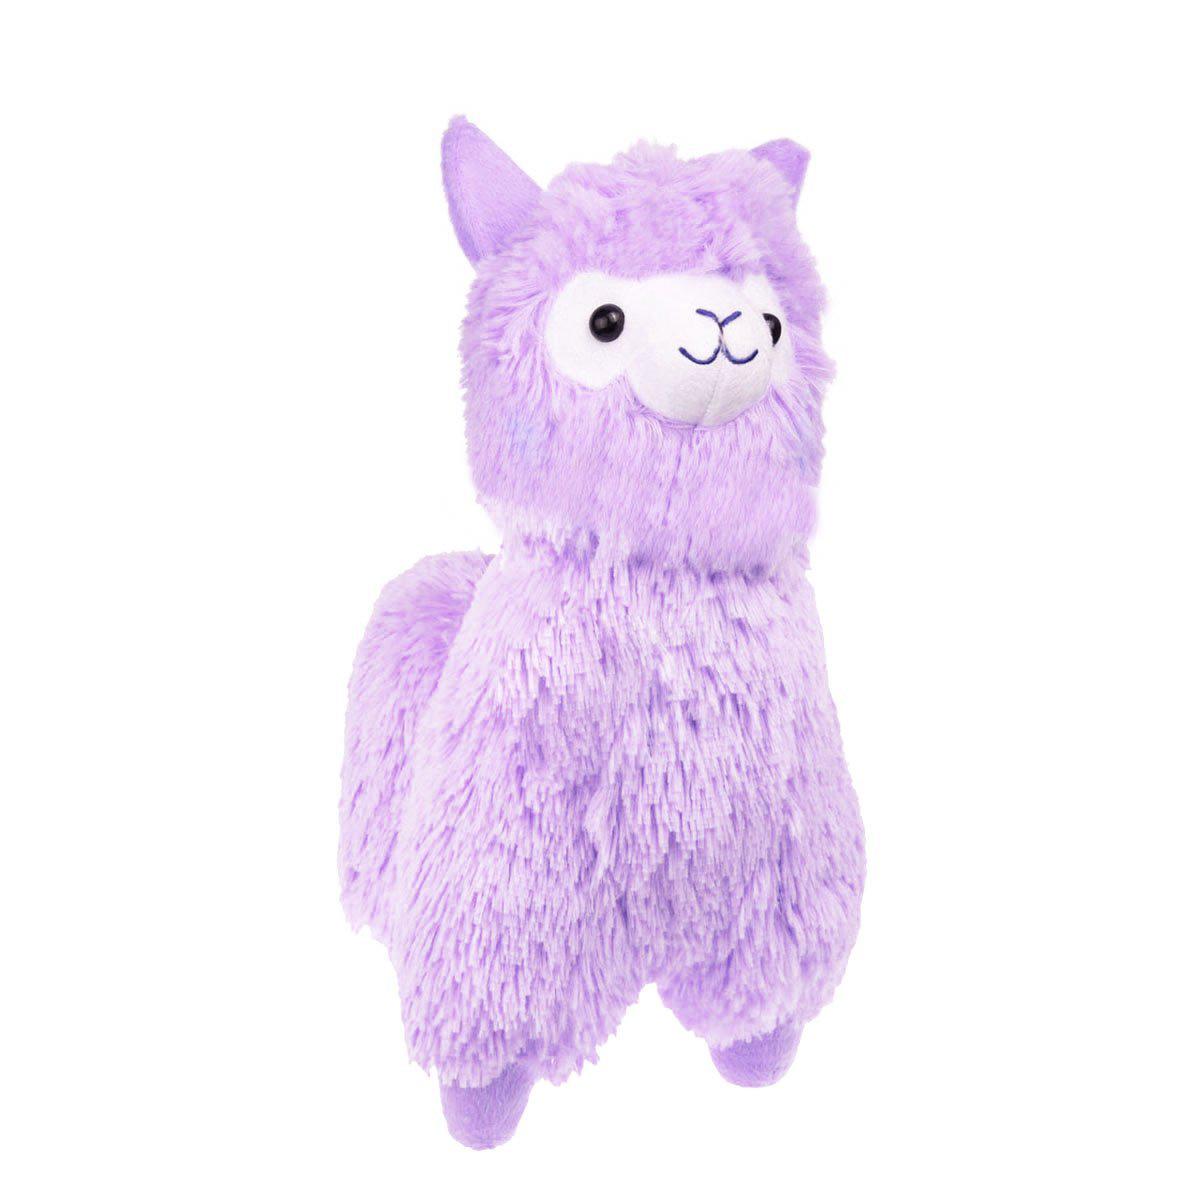 tollion cuddly soft purple alpaca llama lamb toy -7" stuffed animal cushion plush doll valentine gift new baby gift graduate 